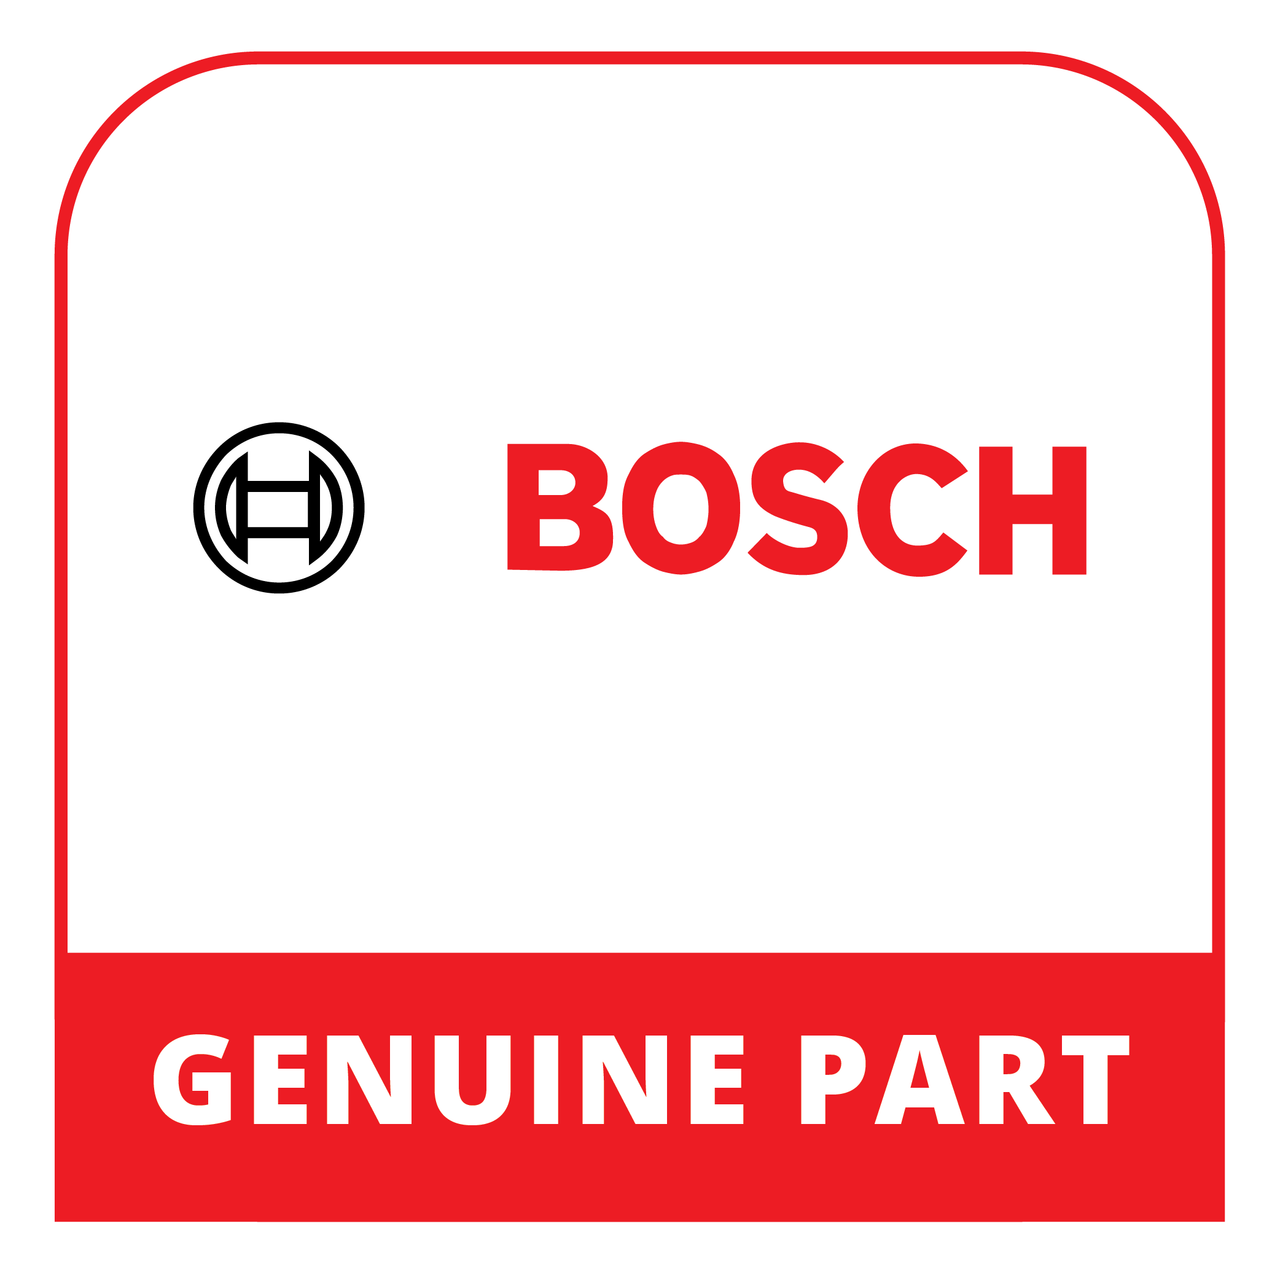 Bosch (Thermador) 20000240 - Display Module - Genuine Bosch (Thermador) Part